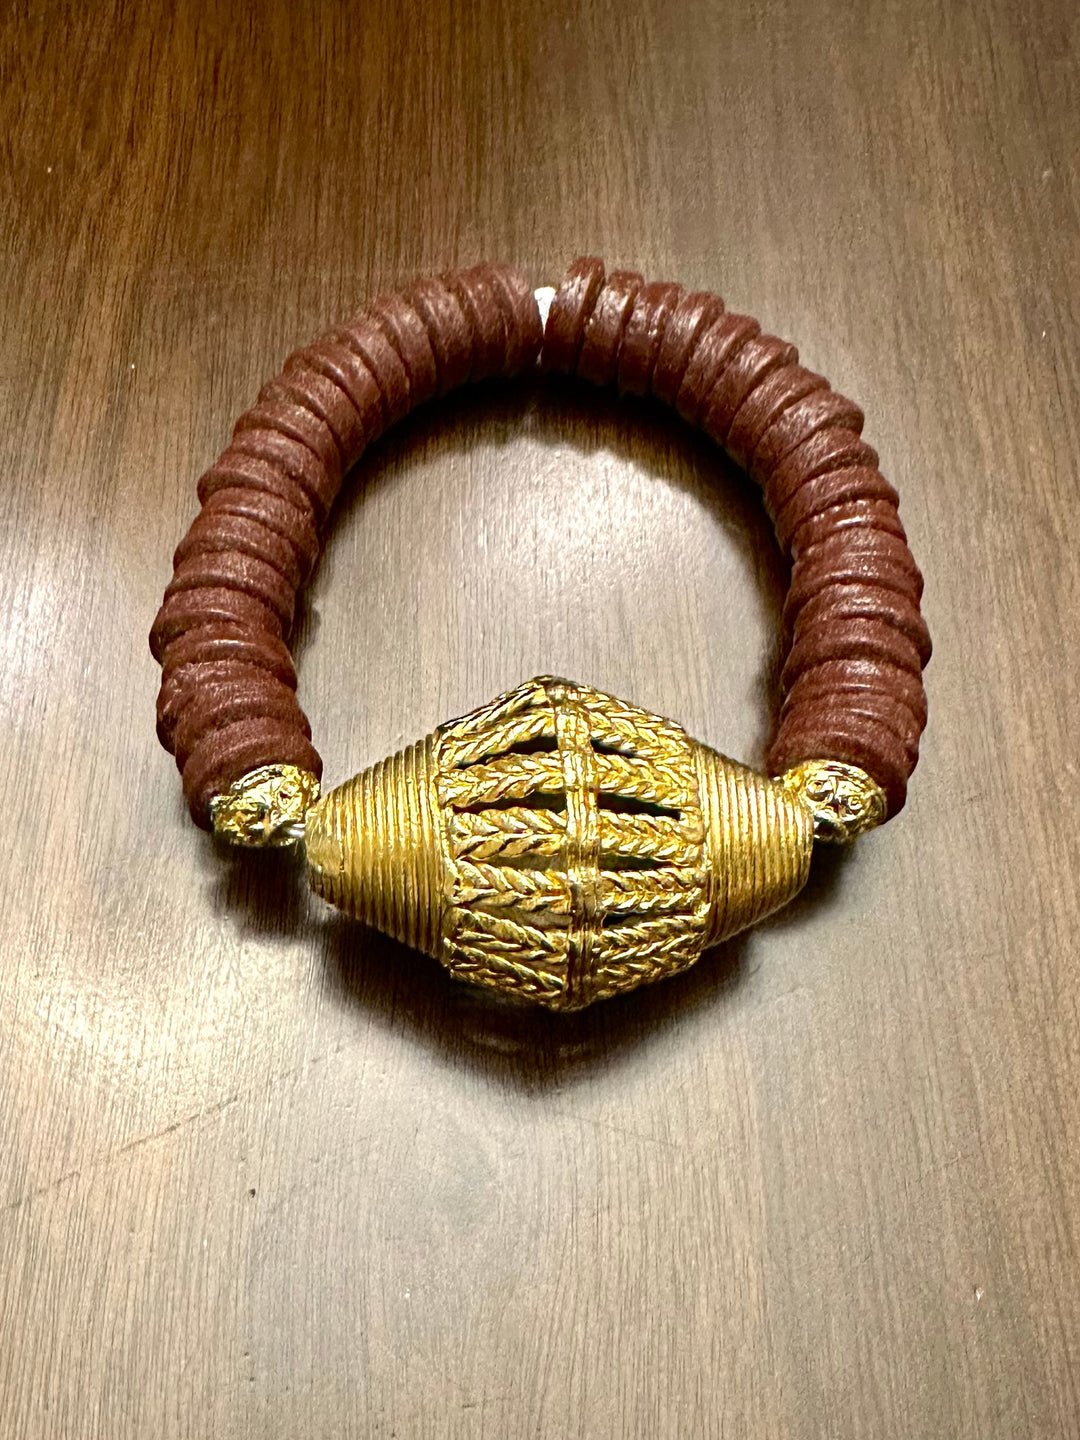 The Akan Royalty Bracelet/ Bangle